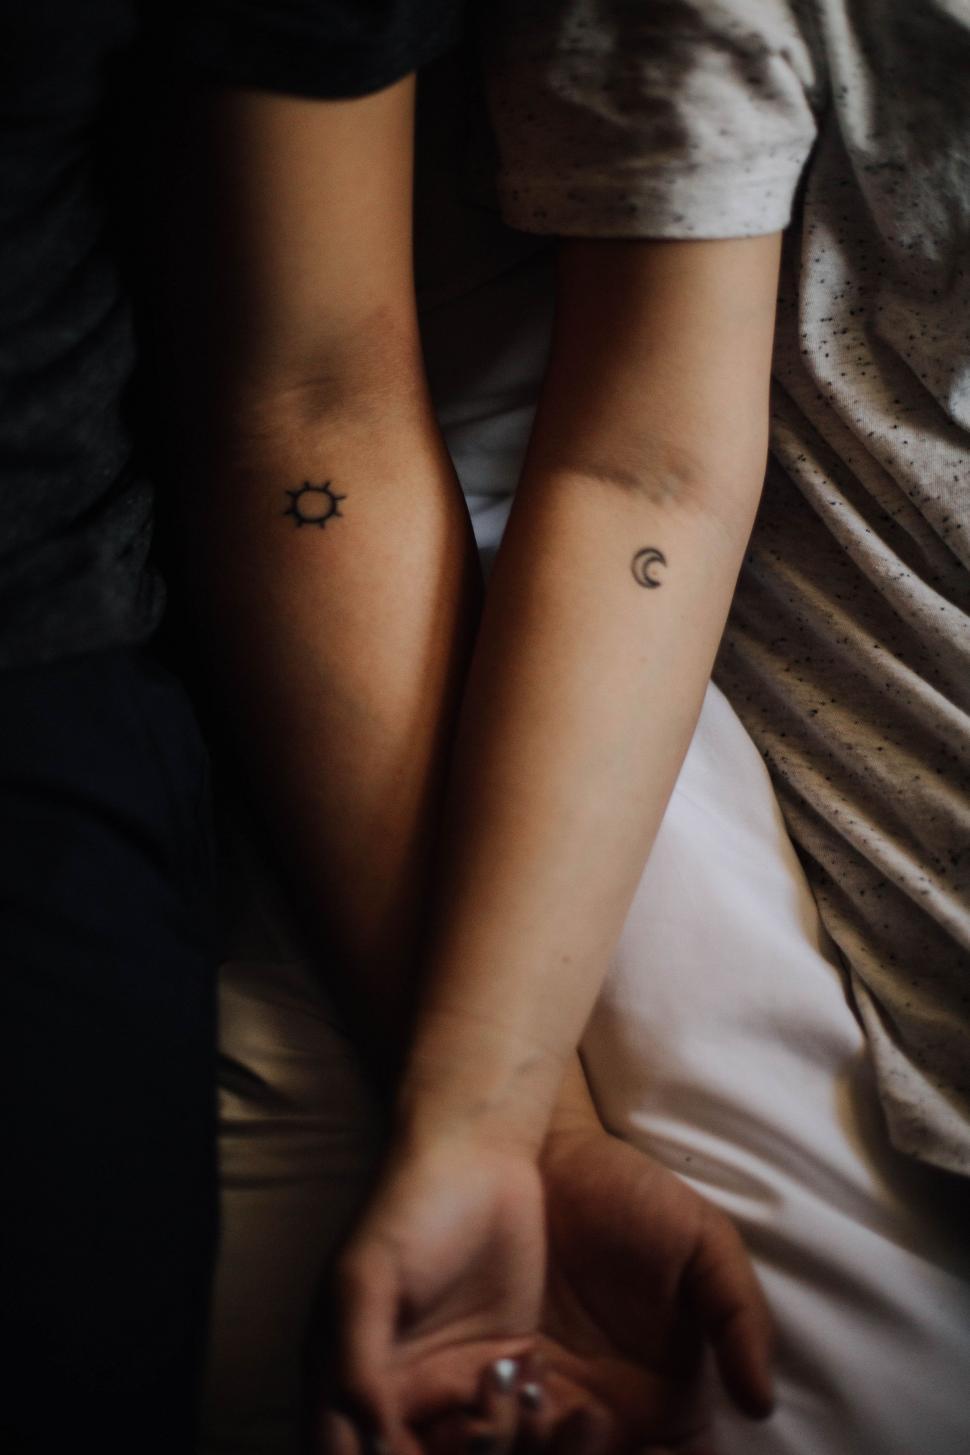 Free Image of Two People Displaying Arm Tattoos 